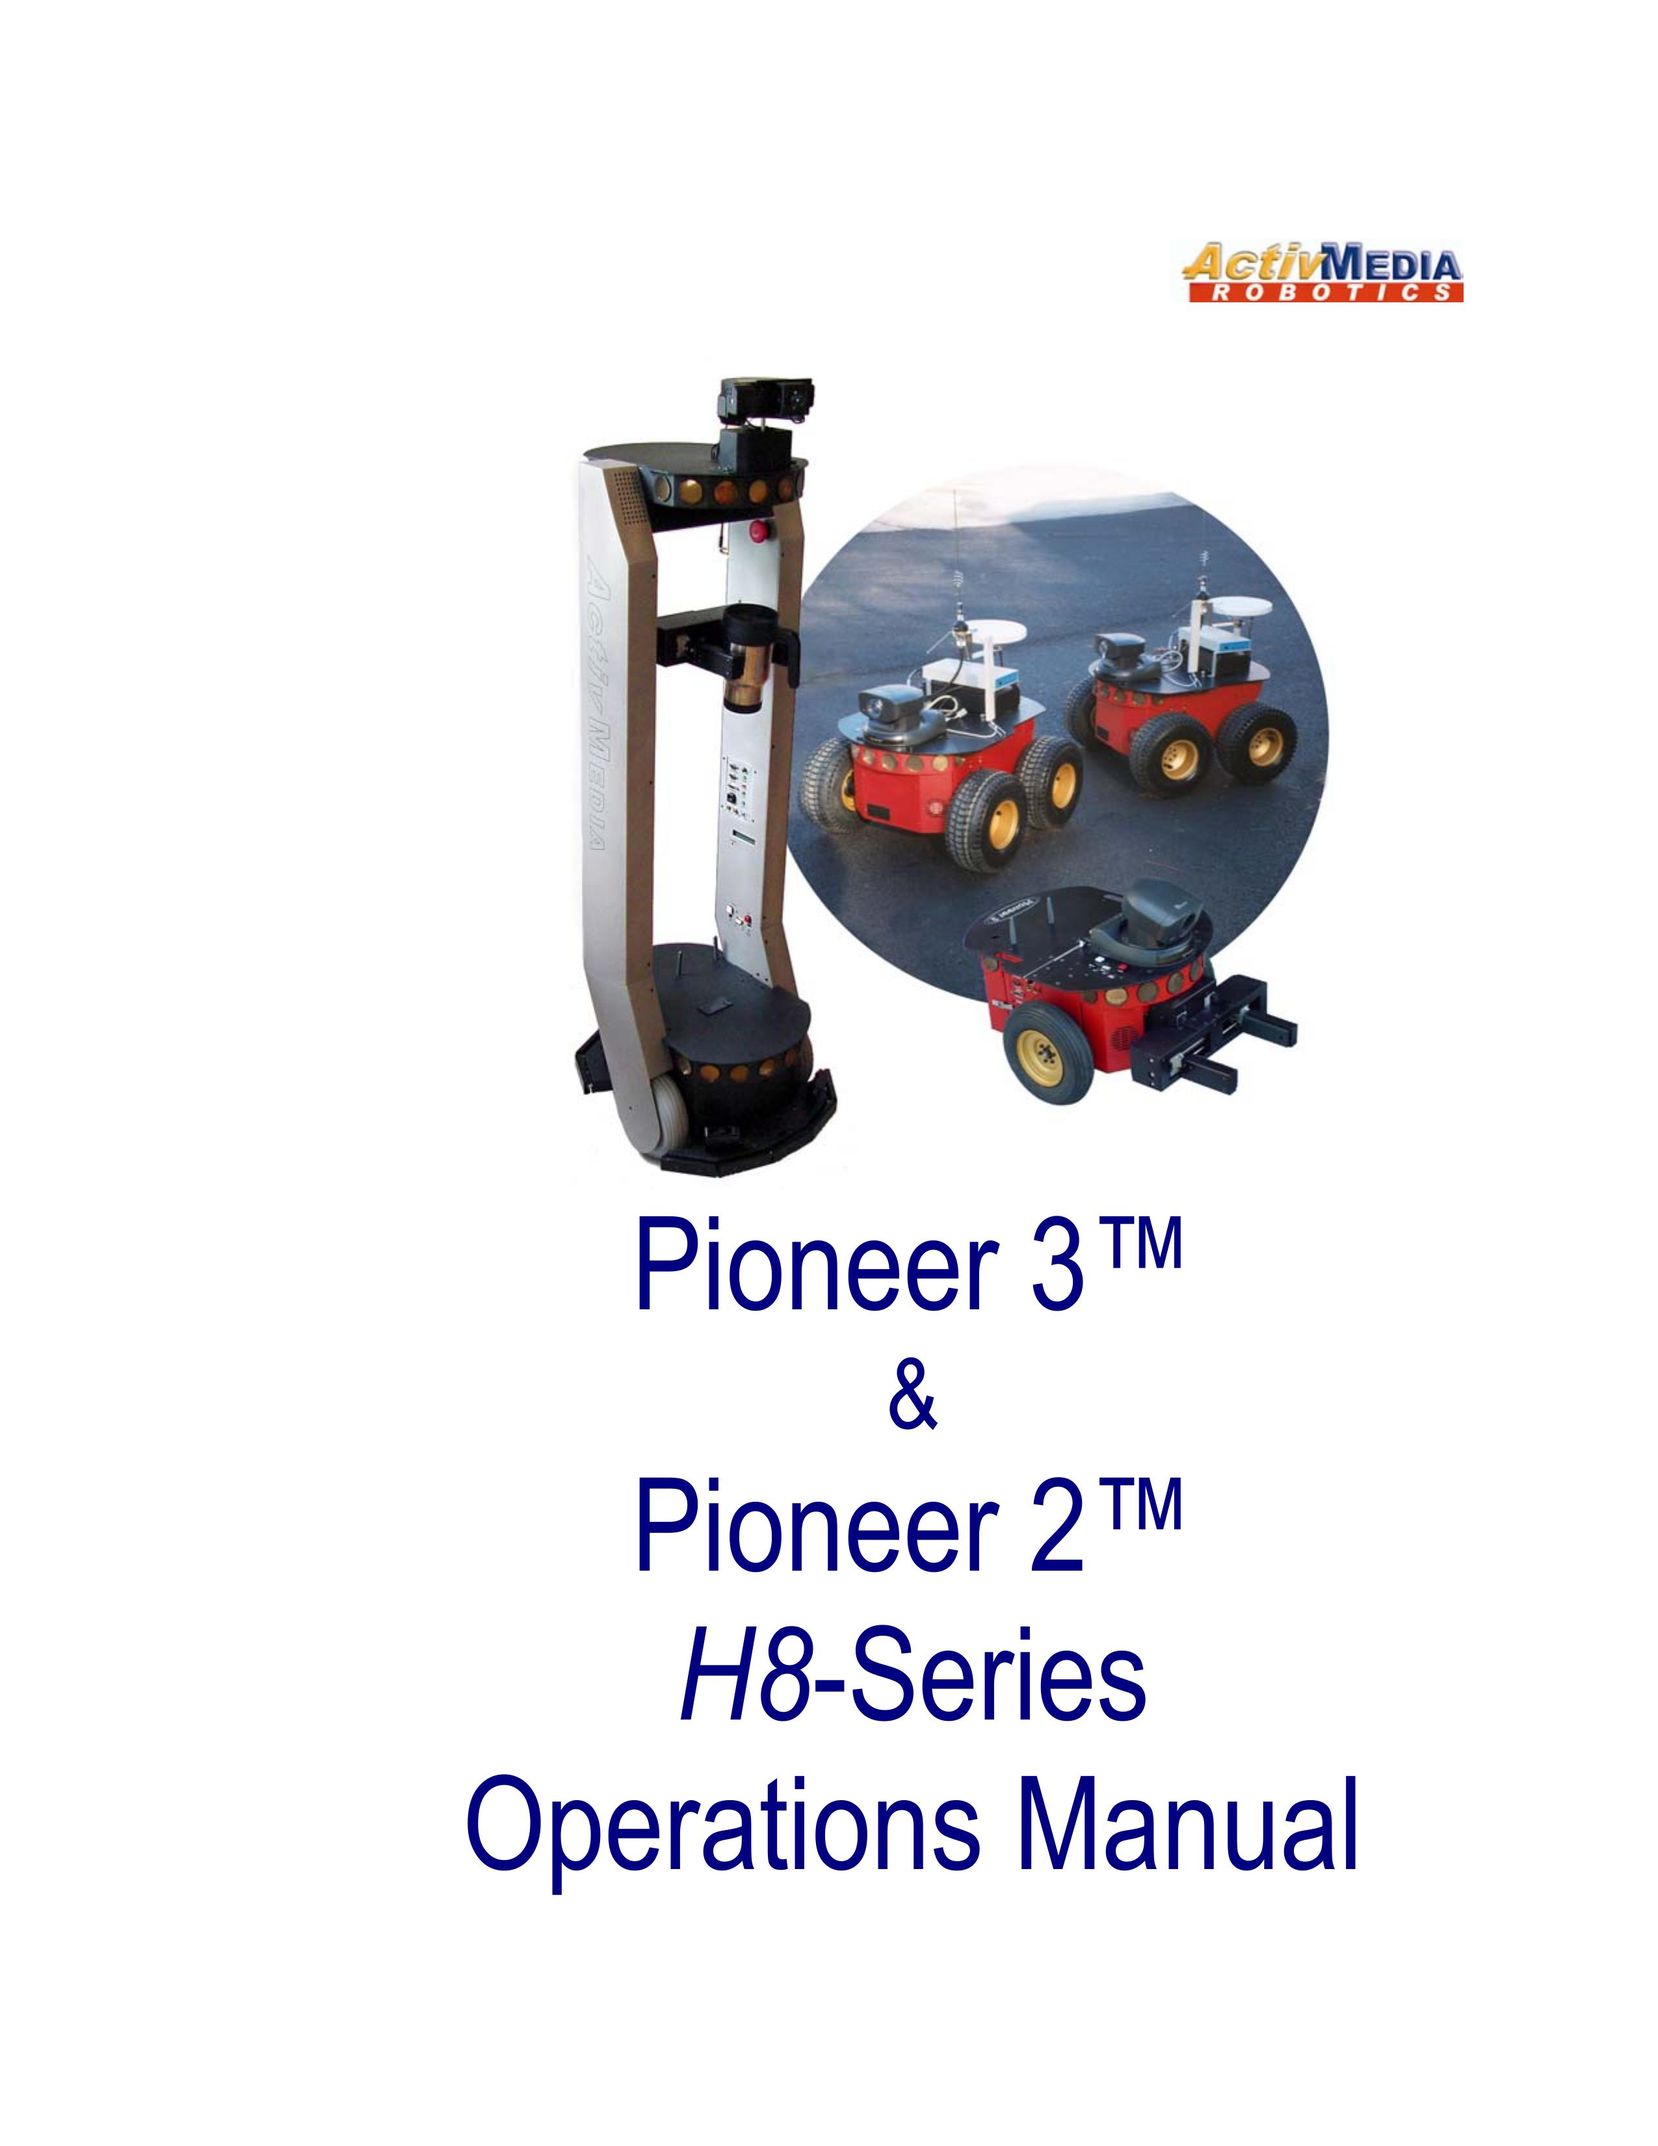 Pioneer 2TM Robotics User Manual